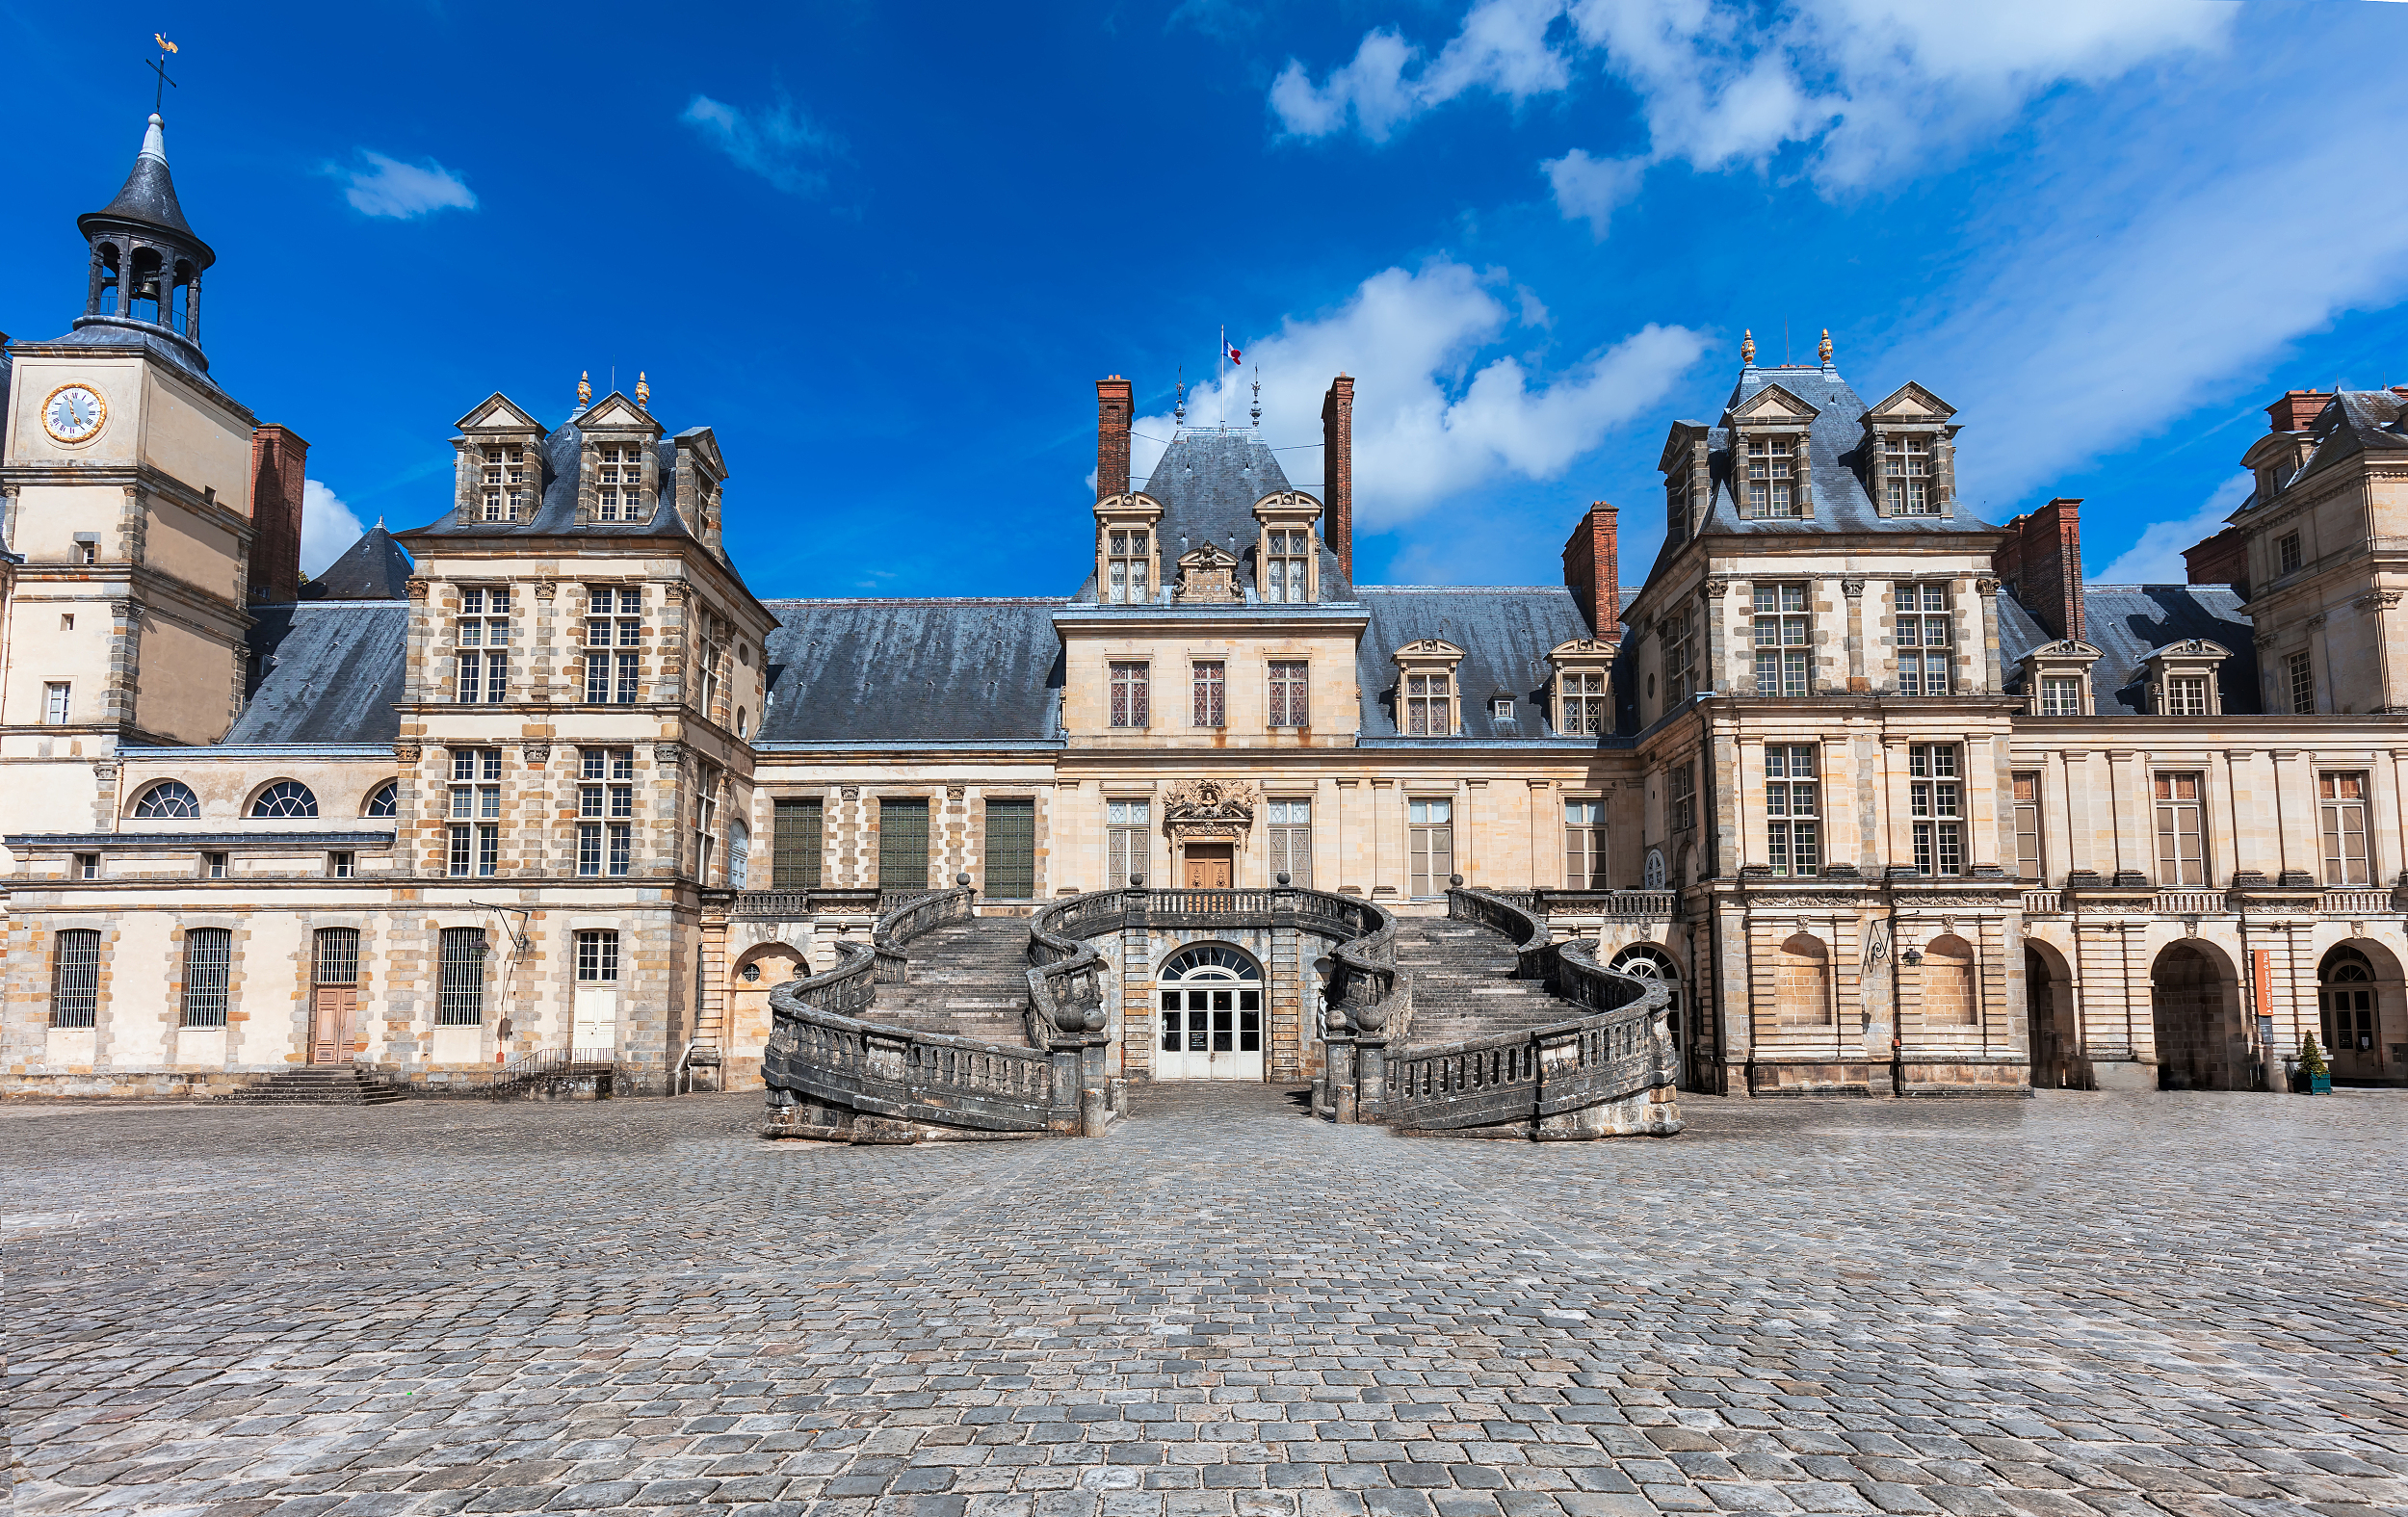 How to get to Chateau de Fontainebleau in Paris using public transport